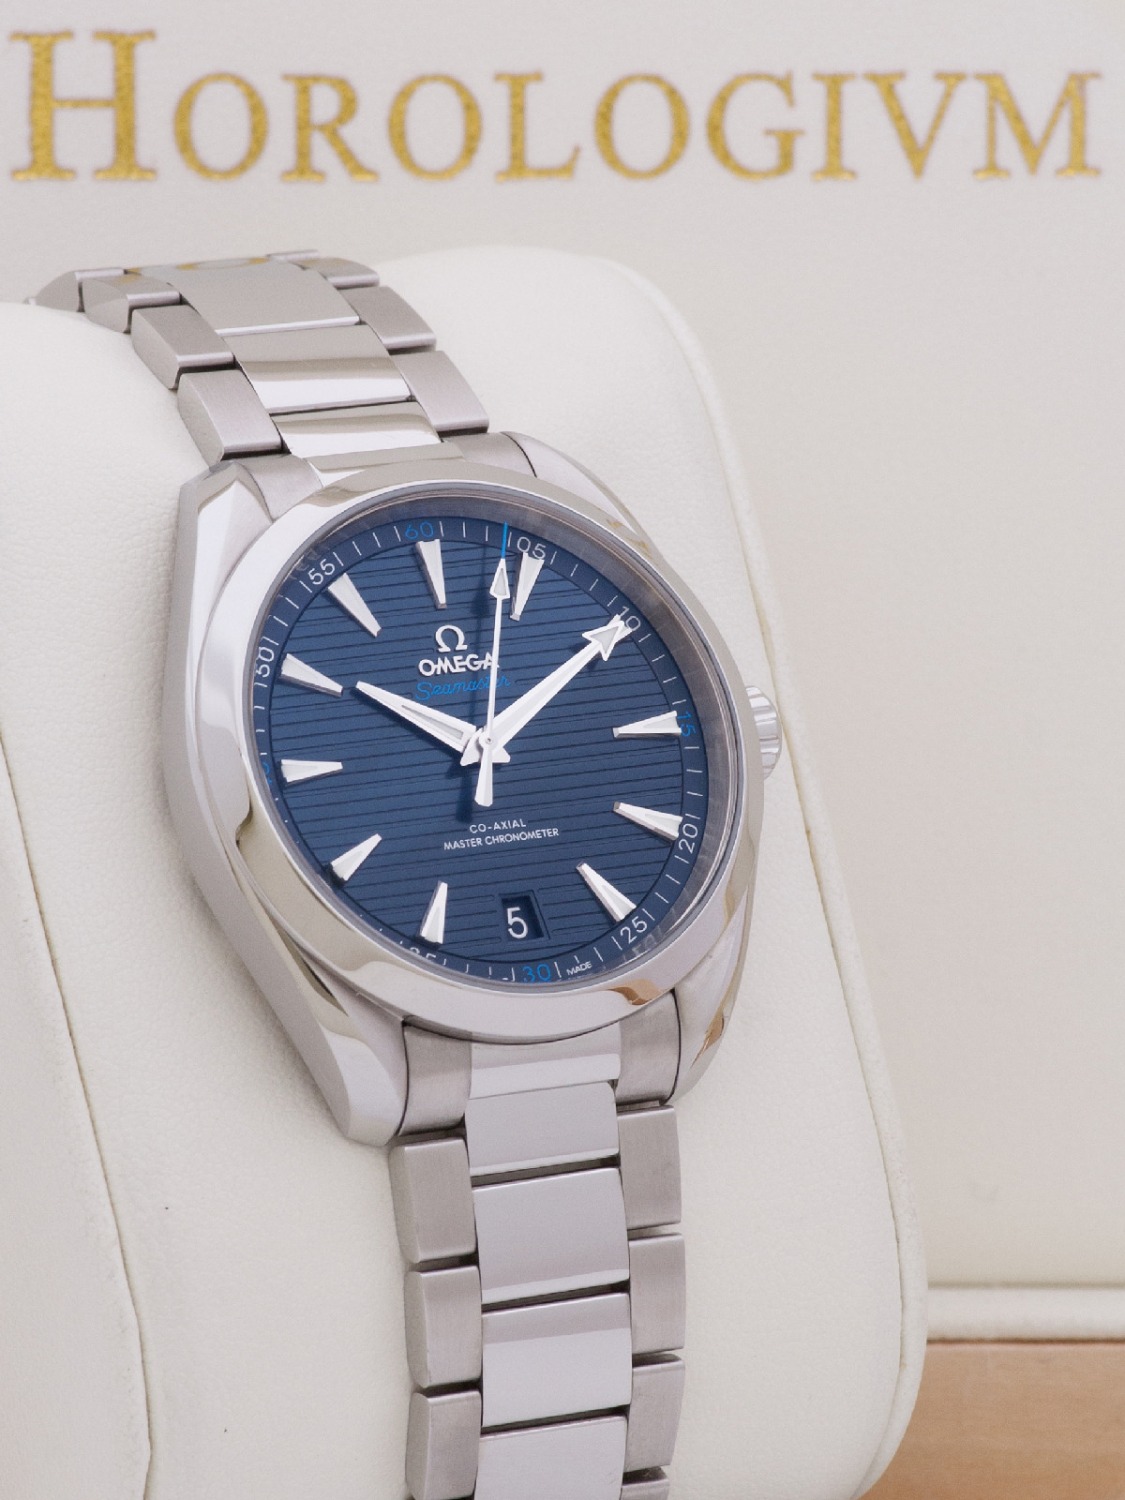 Omega Seamaster Master Chronometer Aqua Terra 150M Blue Dial watch, silver